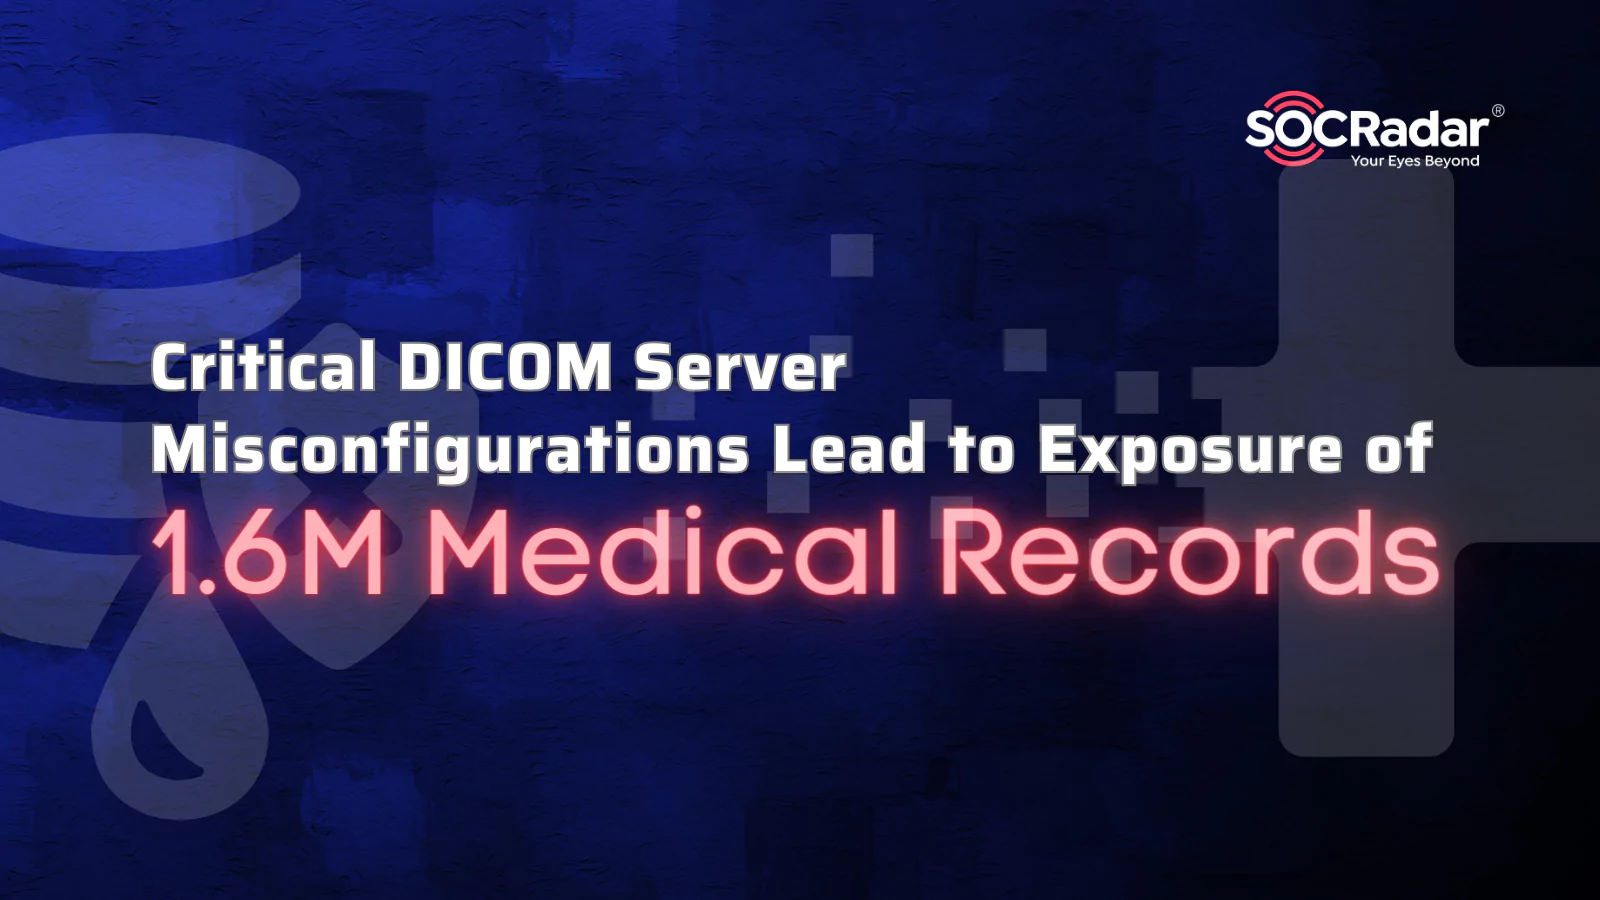 SOCRadar® Cyber Intelligence Inc. | Critical DICOM Server Misconfigurations Lead to Exposure of 1.6M Medical Records